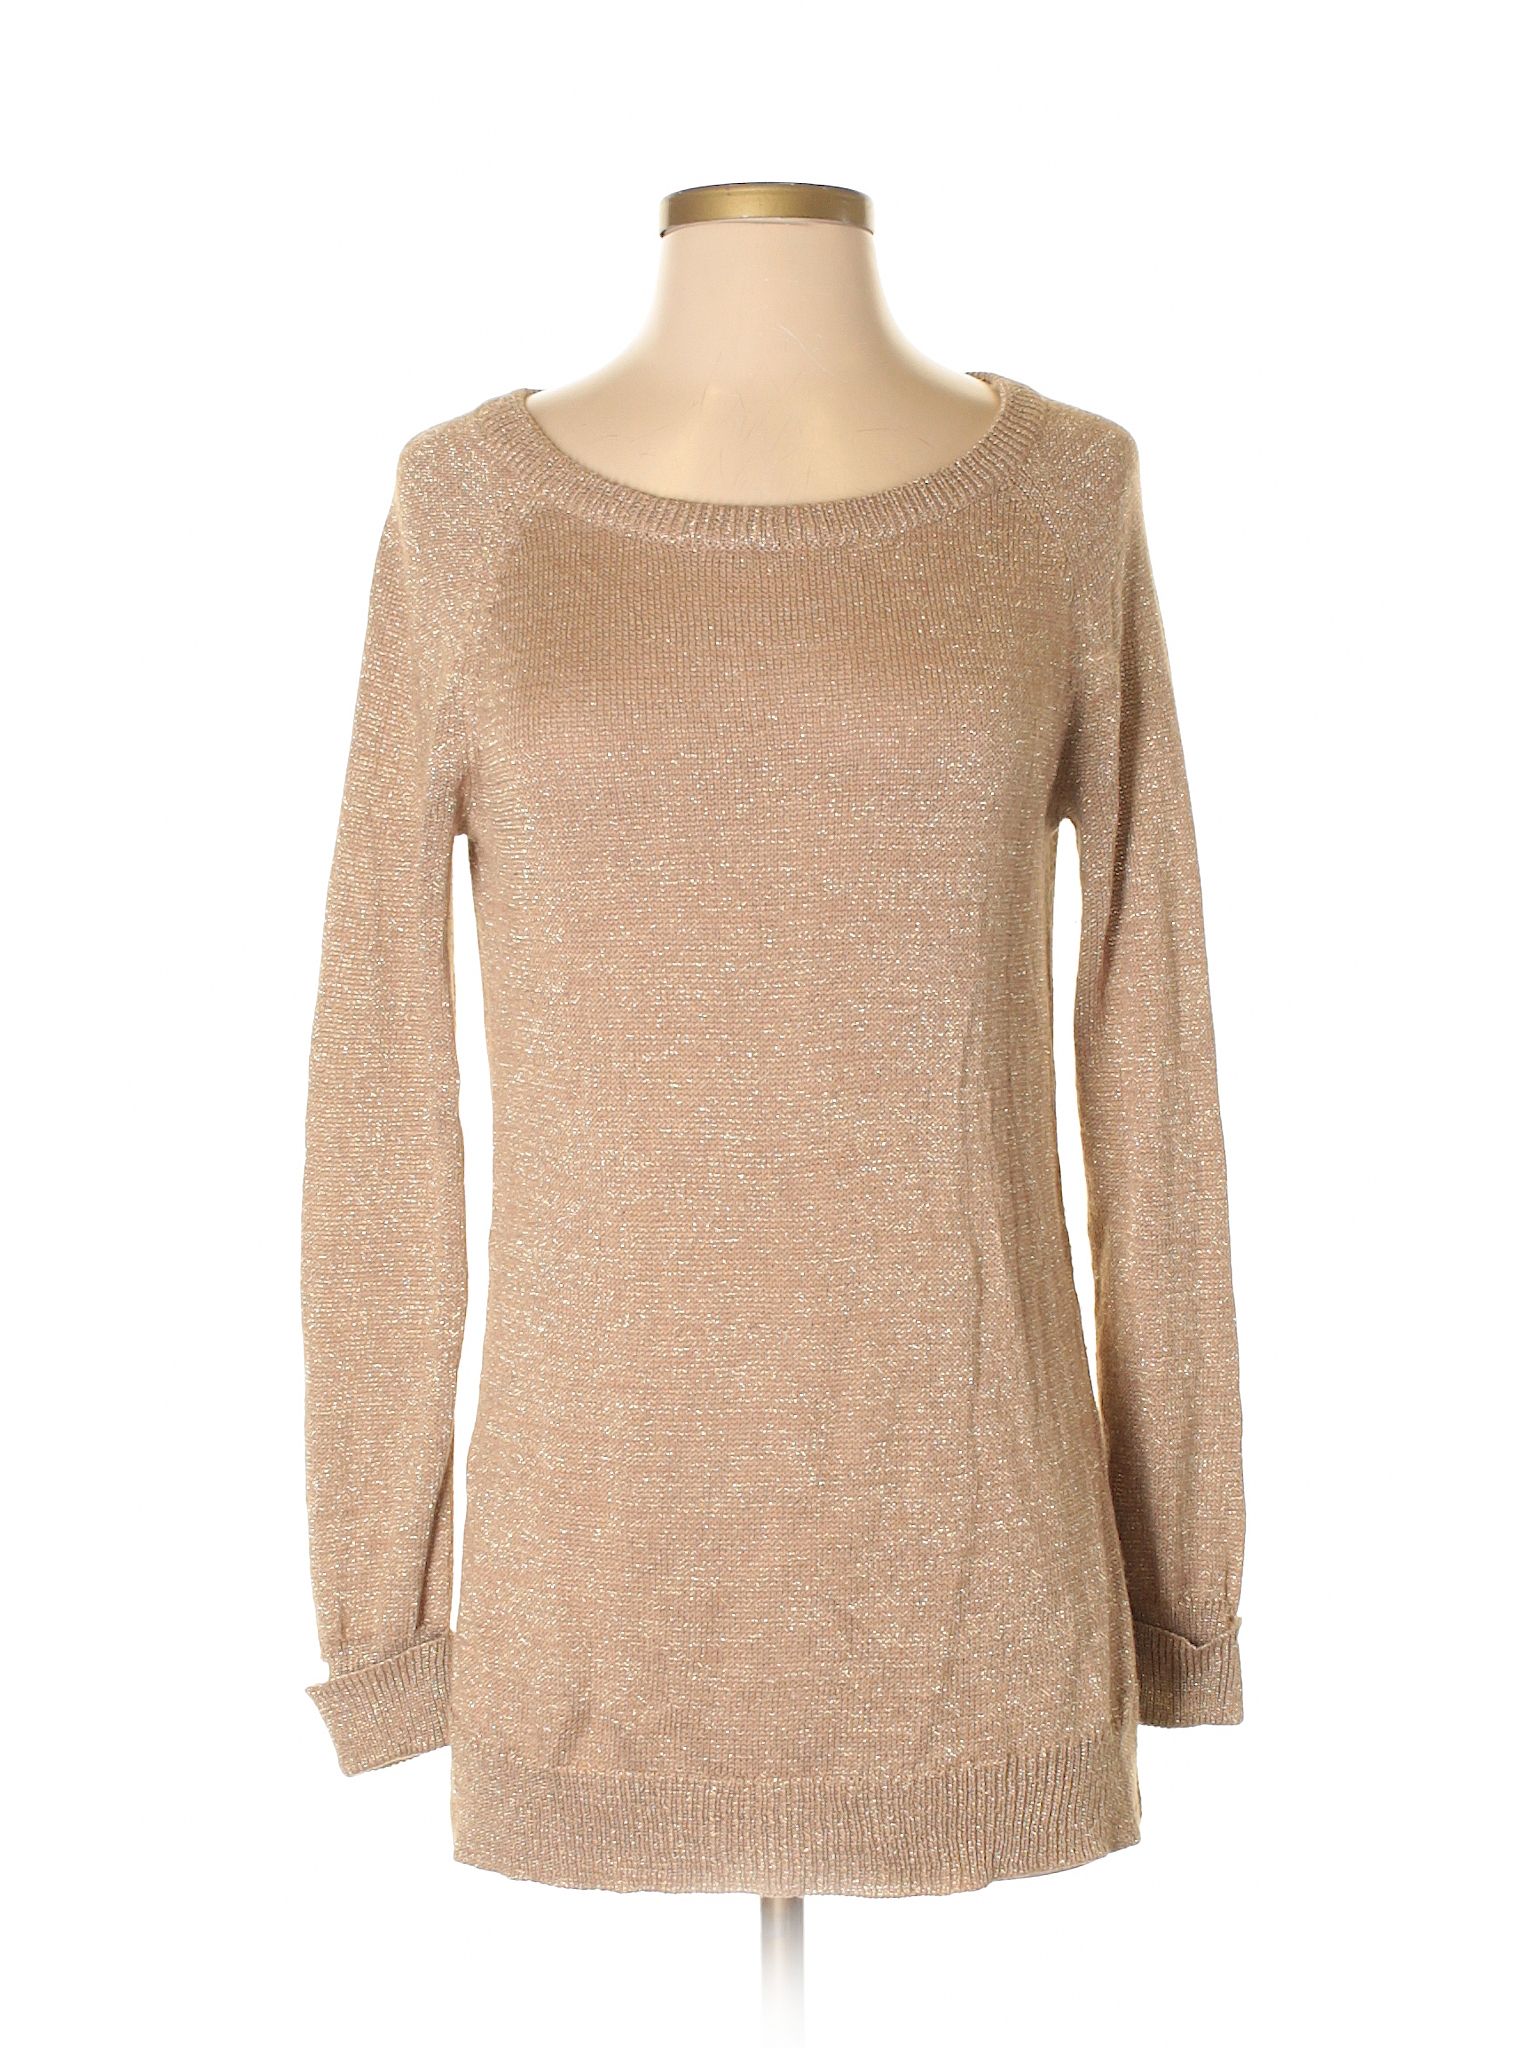 Cupio Metallic Tan Pullover Sweater Size S - 76% off | thredUP